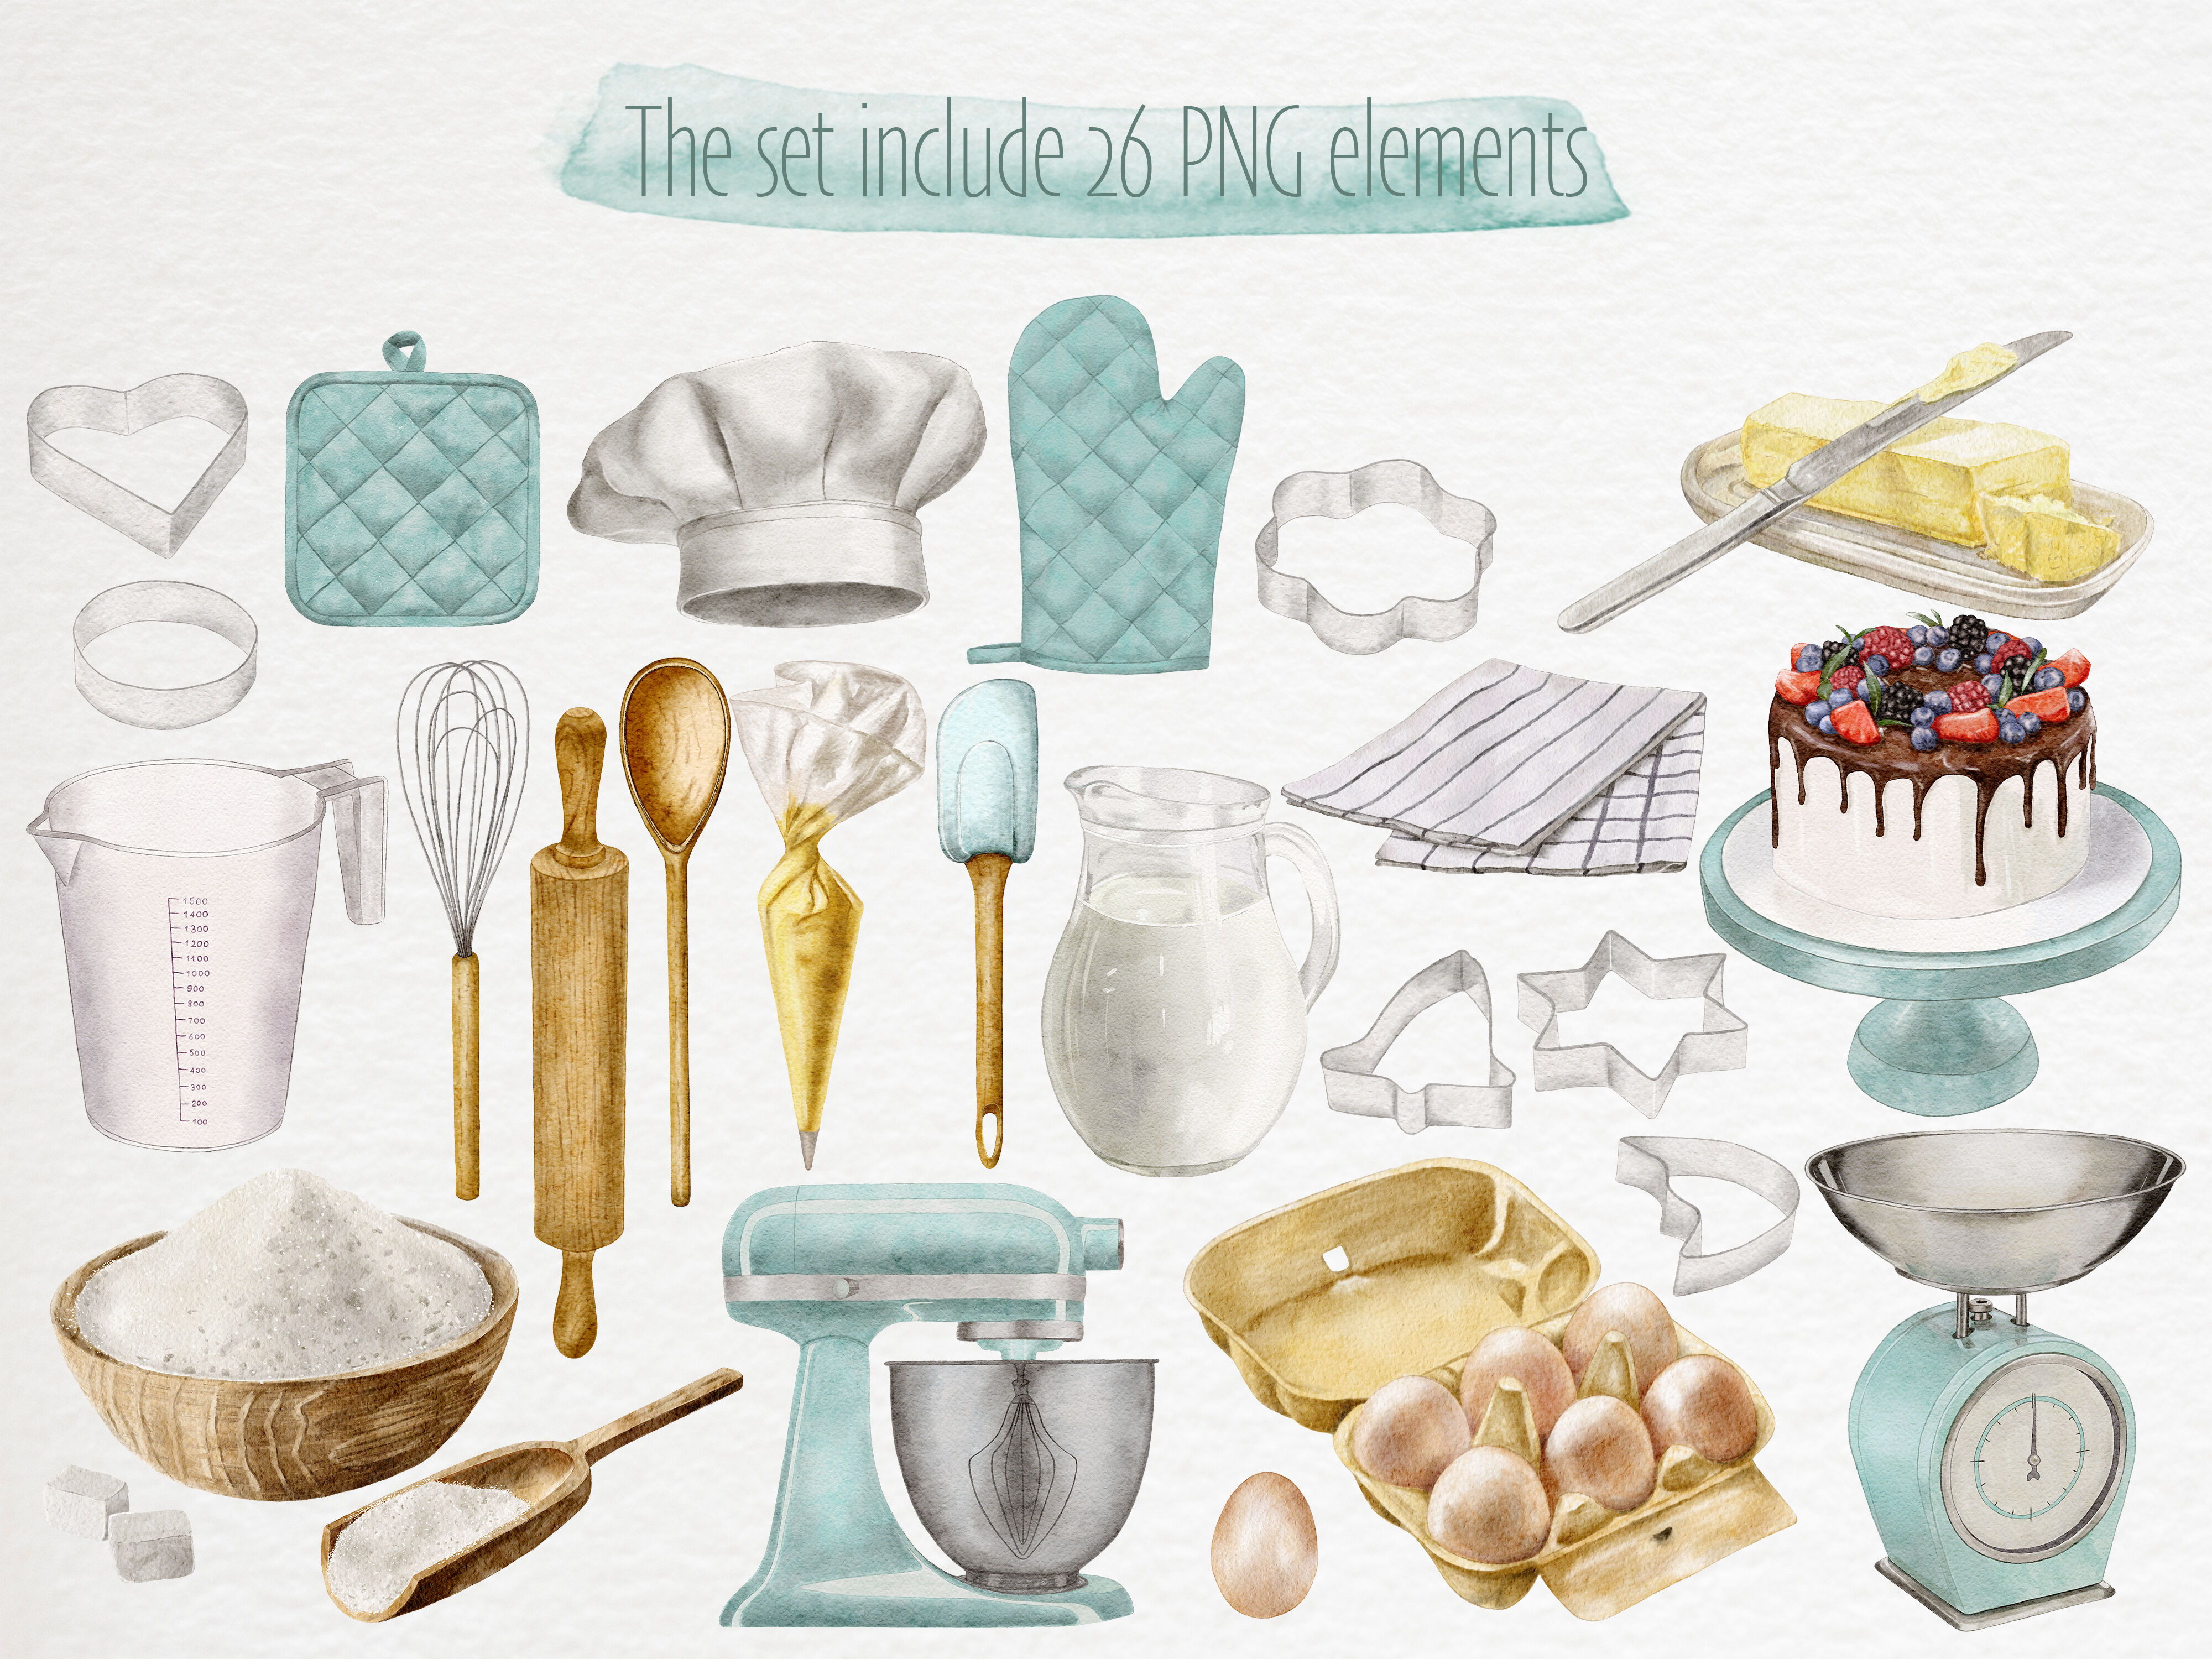 https://media1.thehungryjpeg.com/thumbs2/ori_4158768_vbi5pd41hydob0cg6gotv07nswqbojzhsqzkvgnl_watercolor-baking-clipart-cooking-elements-ingredients-hand-drawn-png.jpg